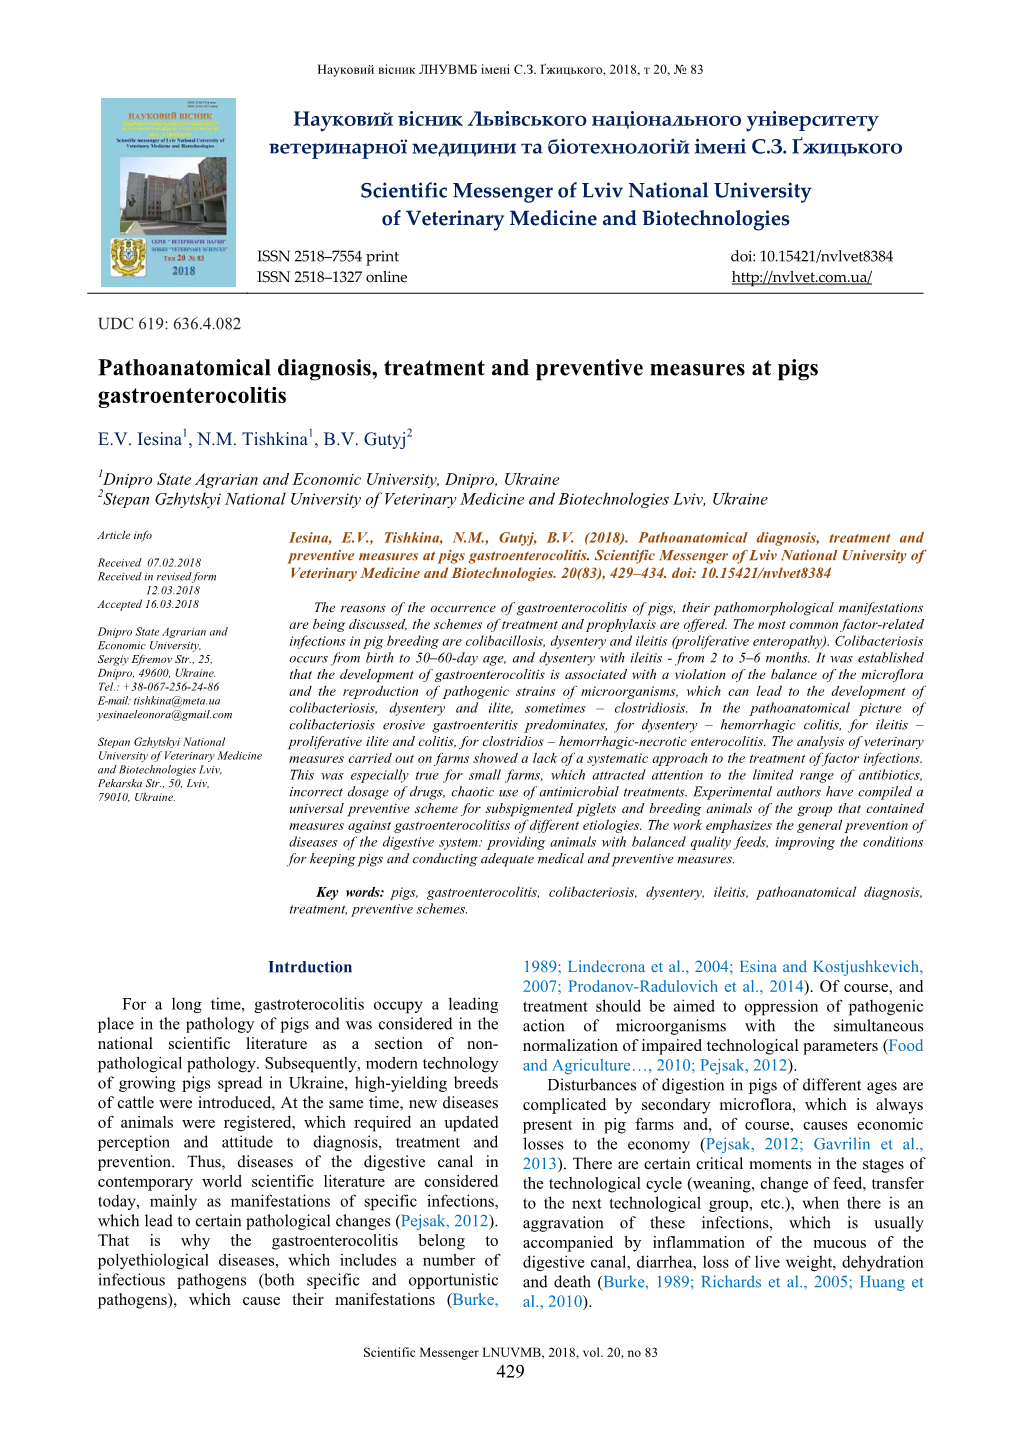 Pathoanatomical Diagnosis, Treatment and Preventive Measures at Pigs Gastroenterocolitis